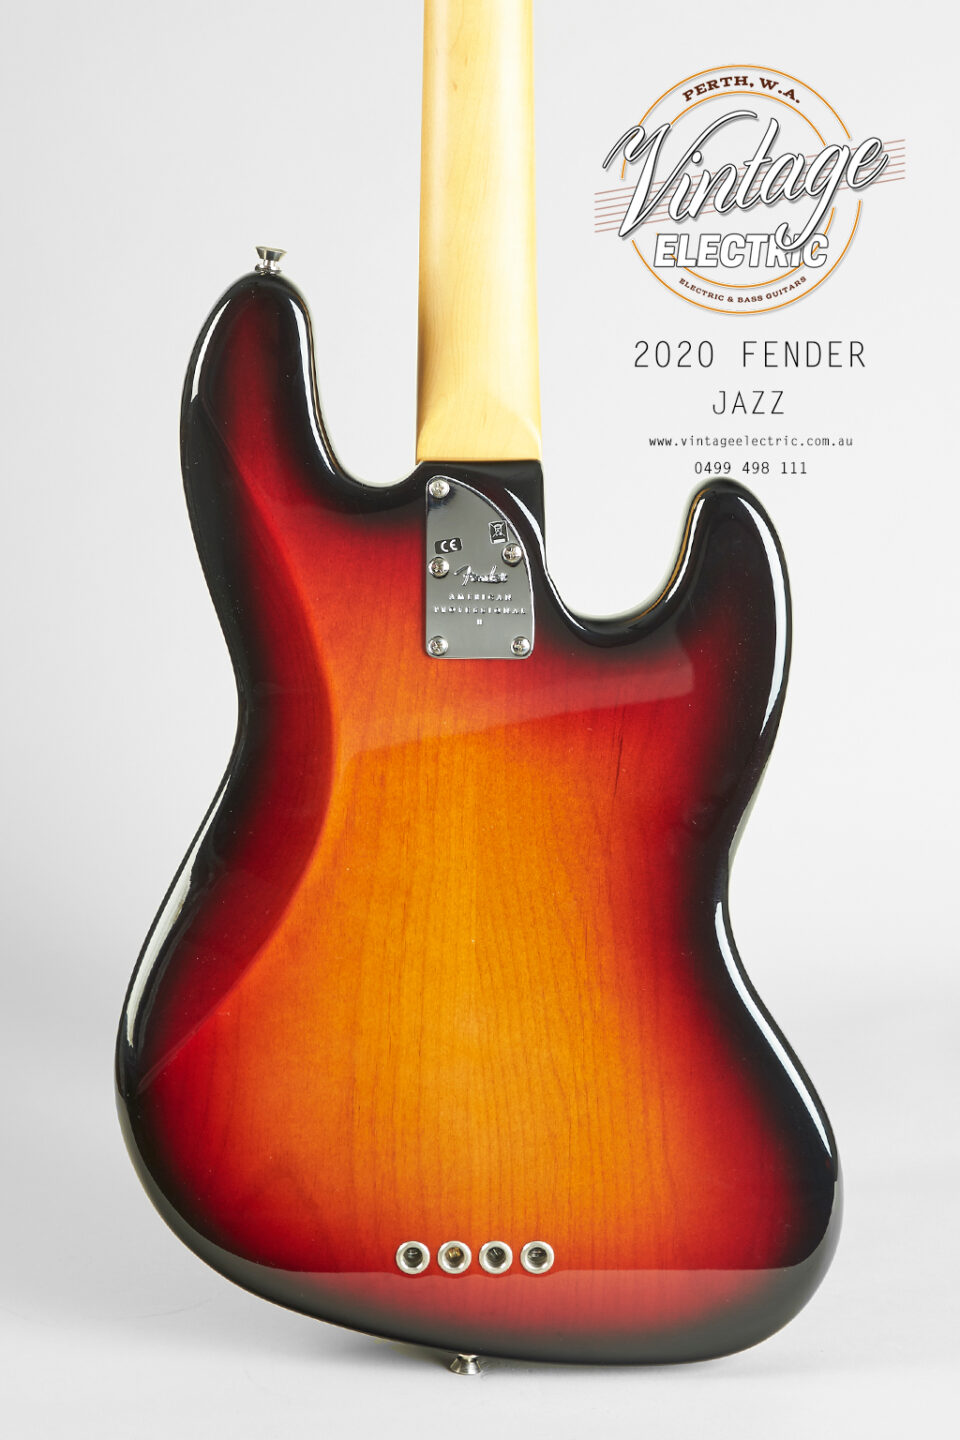 2020 Fender Jazz Back of Bass Body